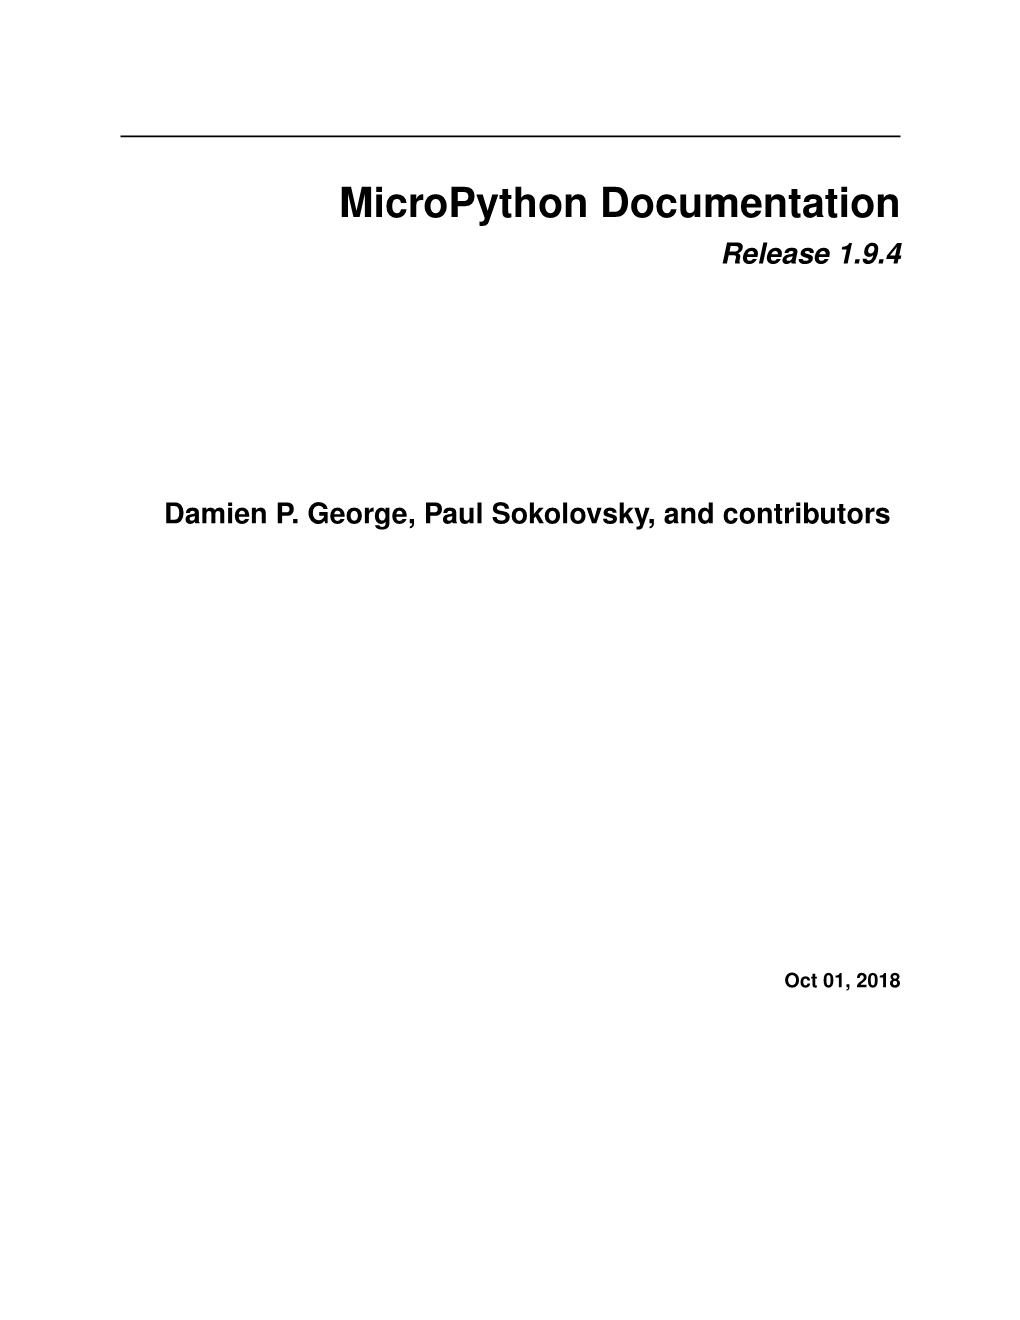 Micropython Documentation Release 1.9.4 Damien P. George, Paul Sokolovsky, and Contributors